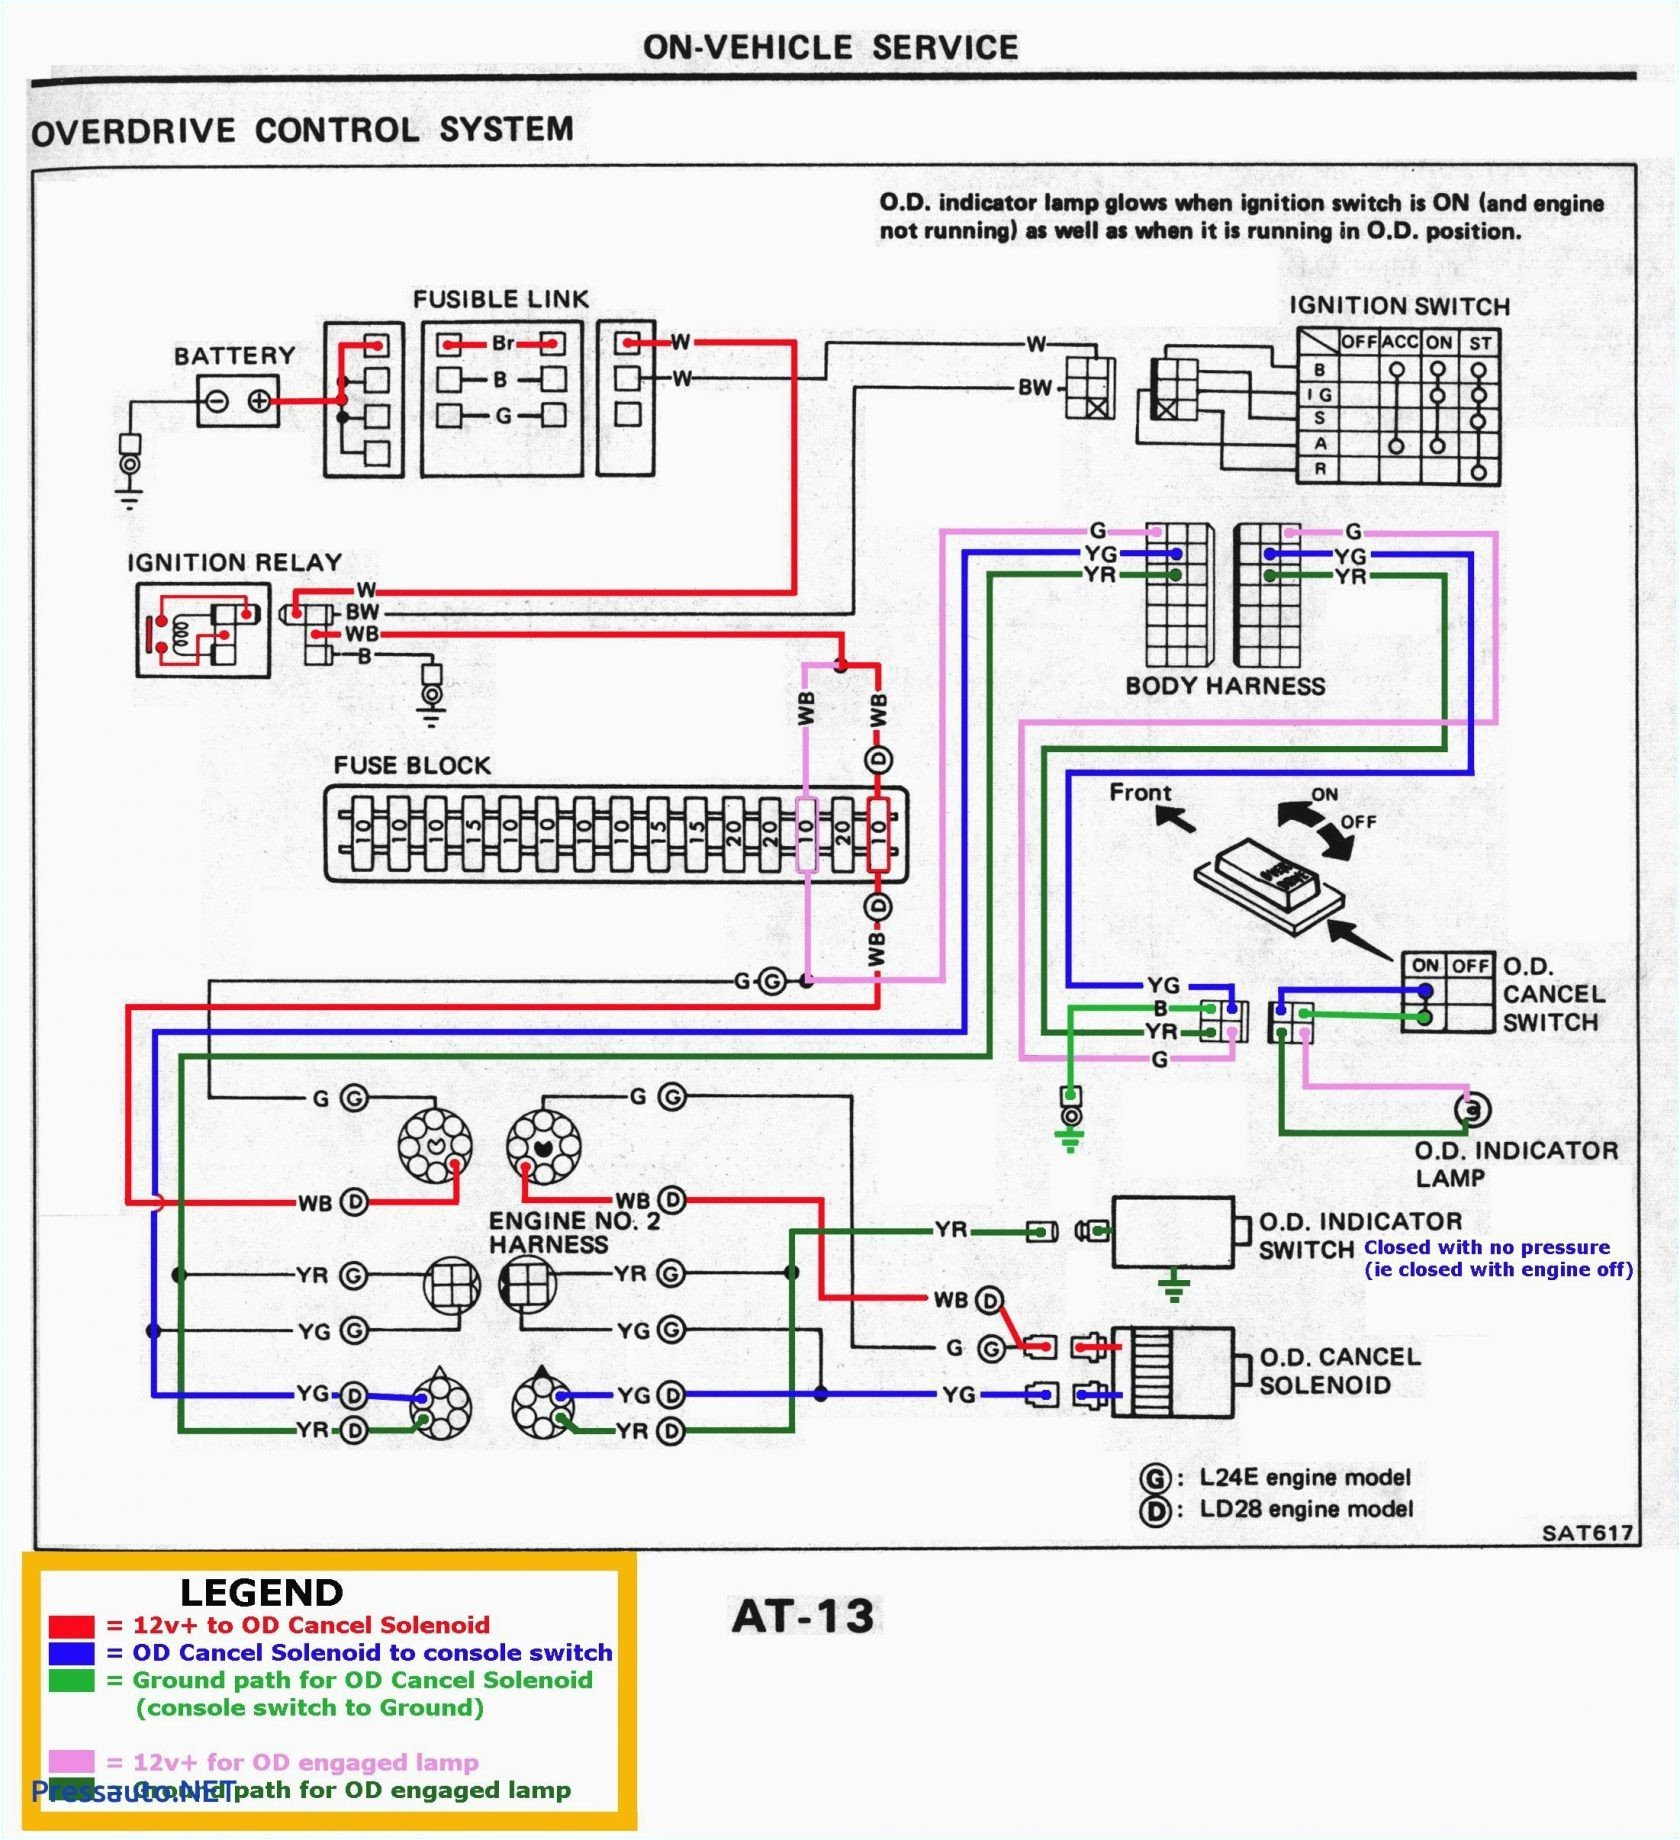 2013 Tacoma Wiring Diagram 2013 Tacoma Trailer Wiring Harness Diagram Wiring Diagram toolbox